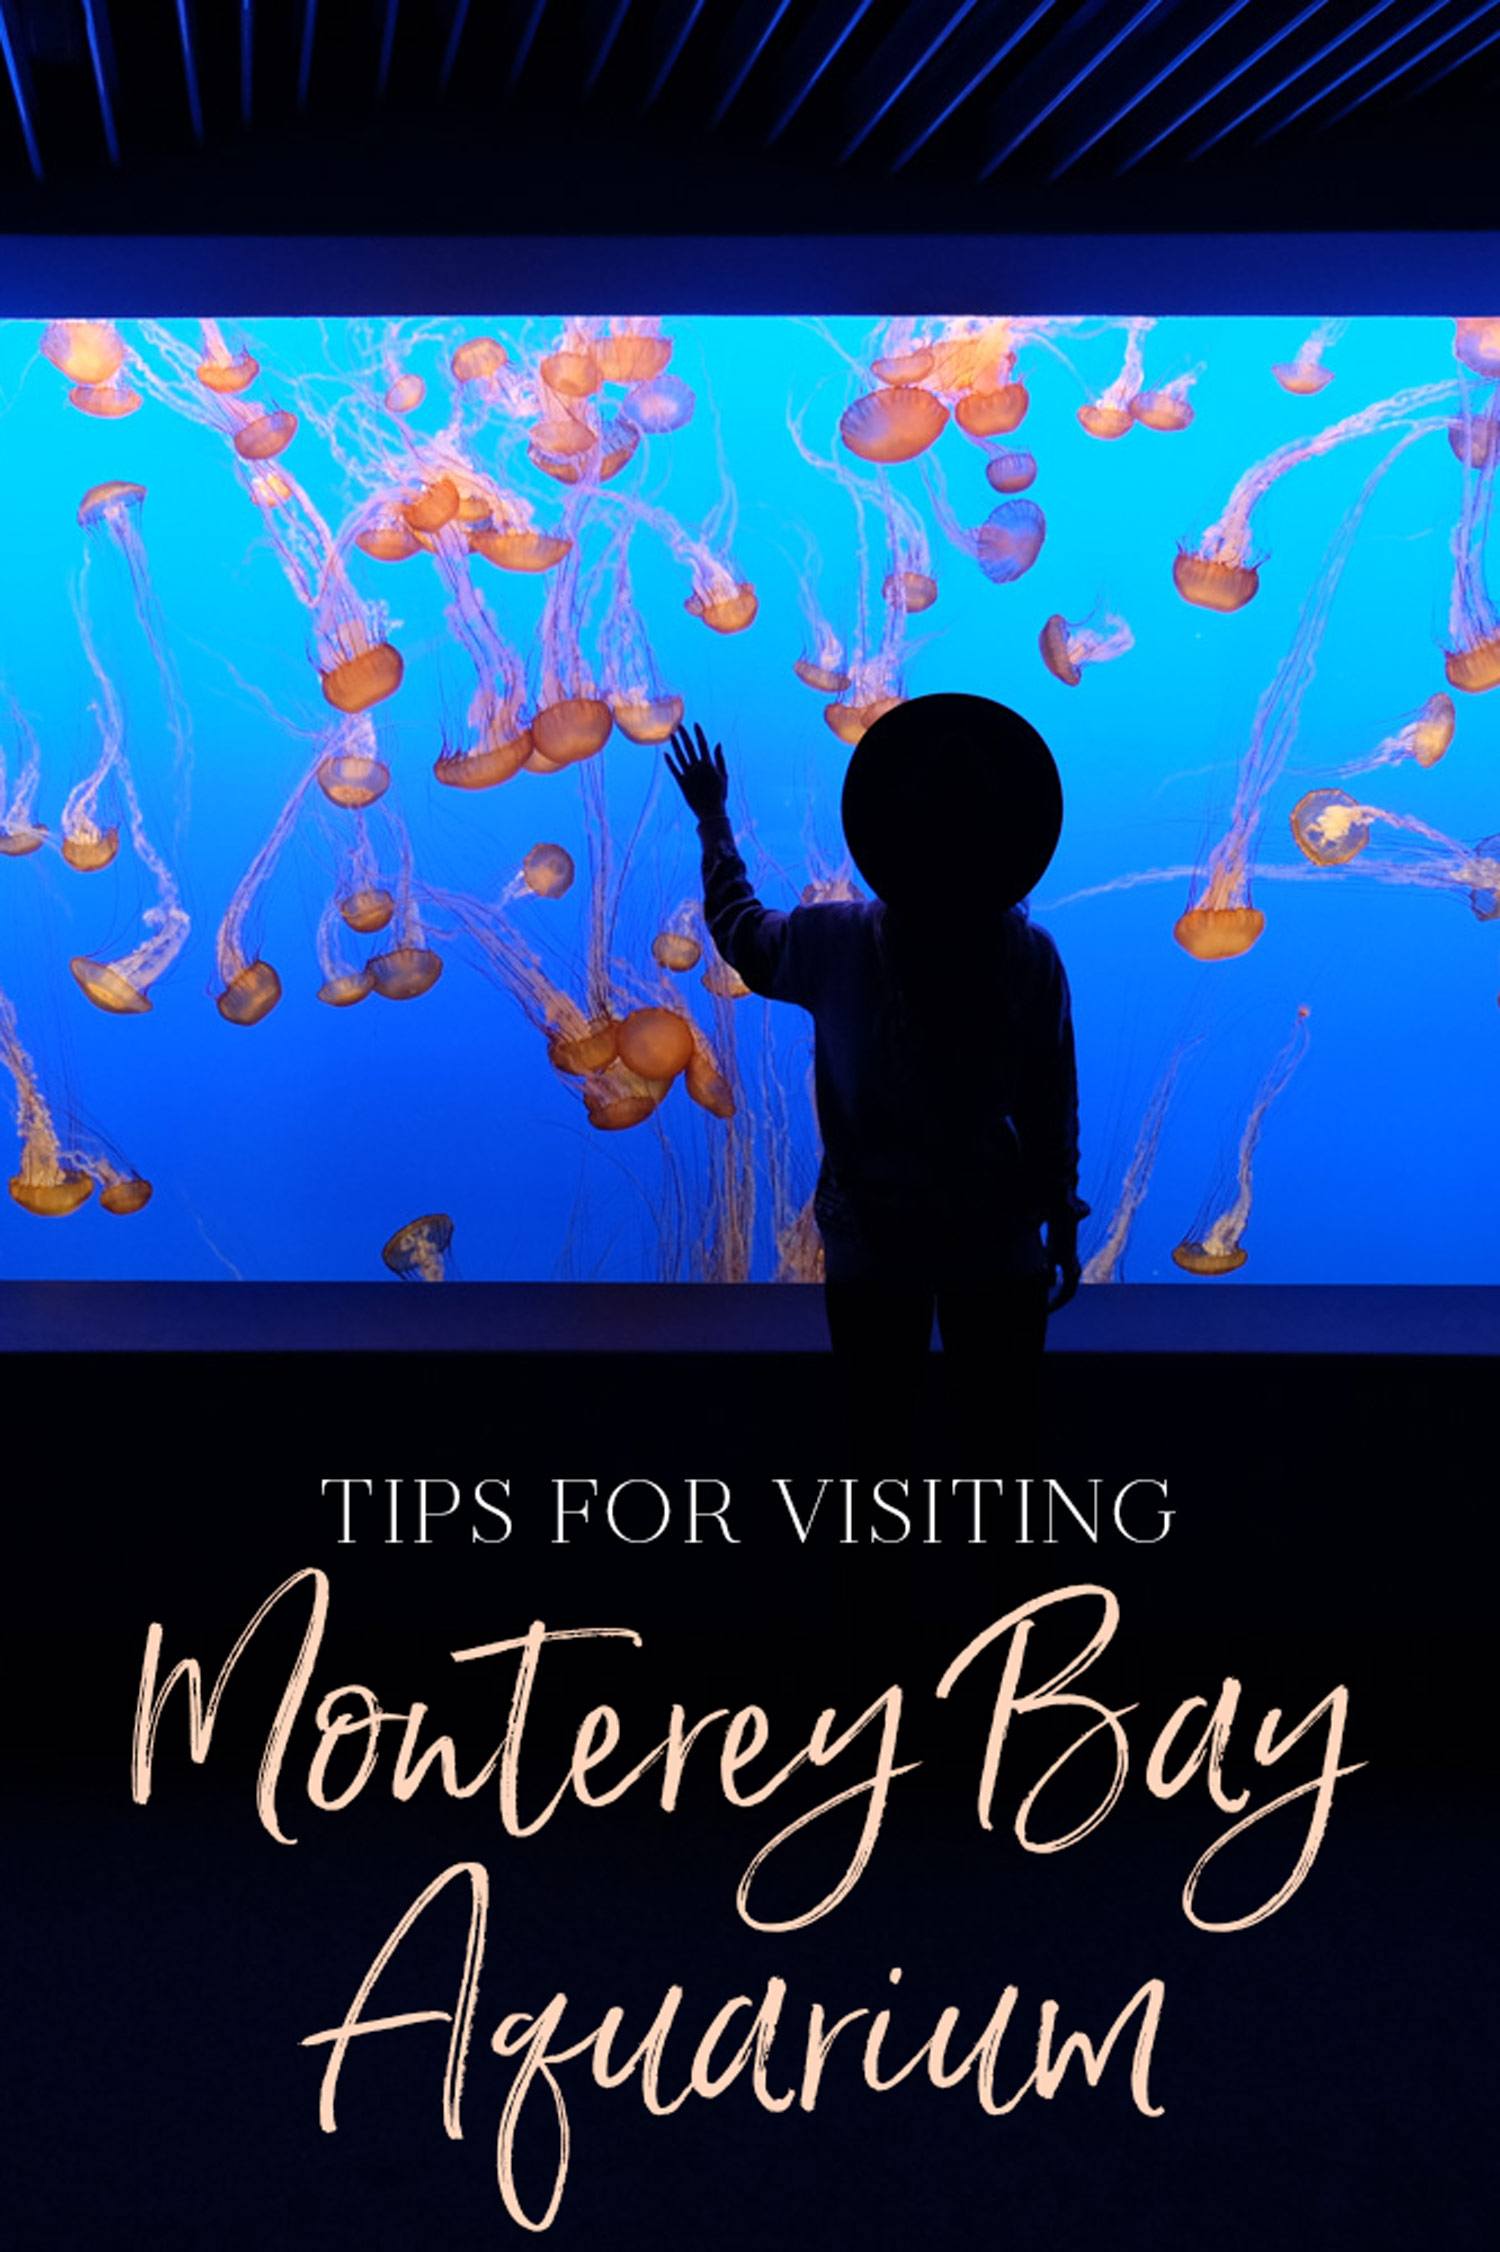 Tips for Visiting Monterey Bay Aquarium